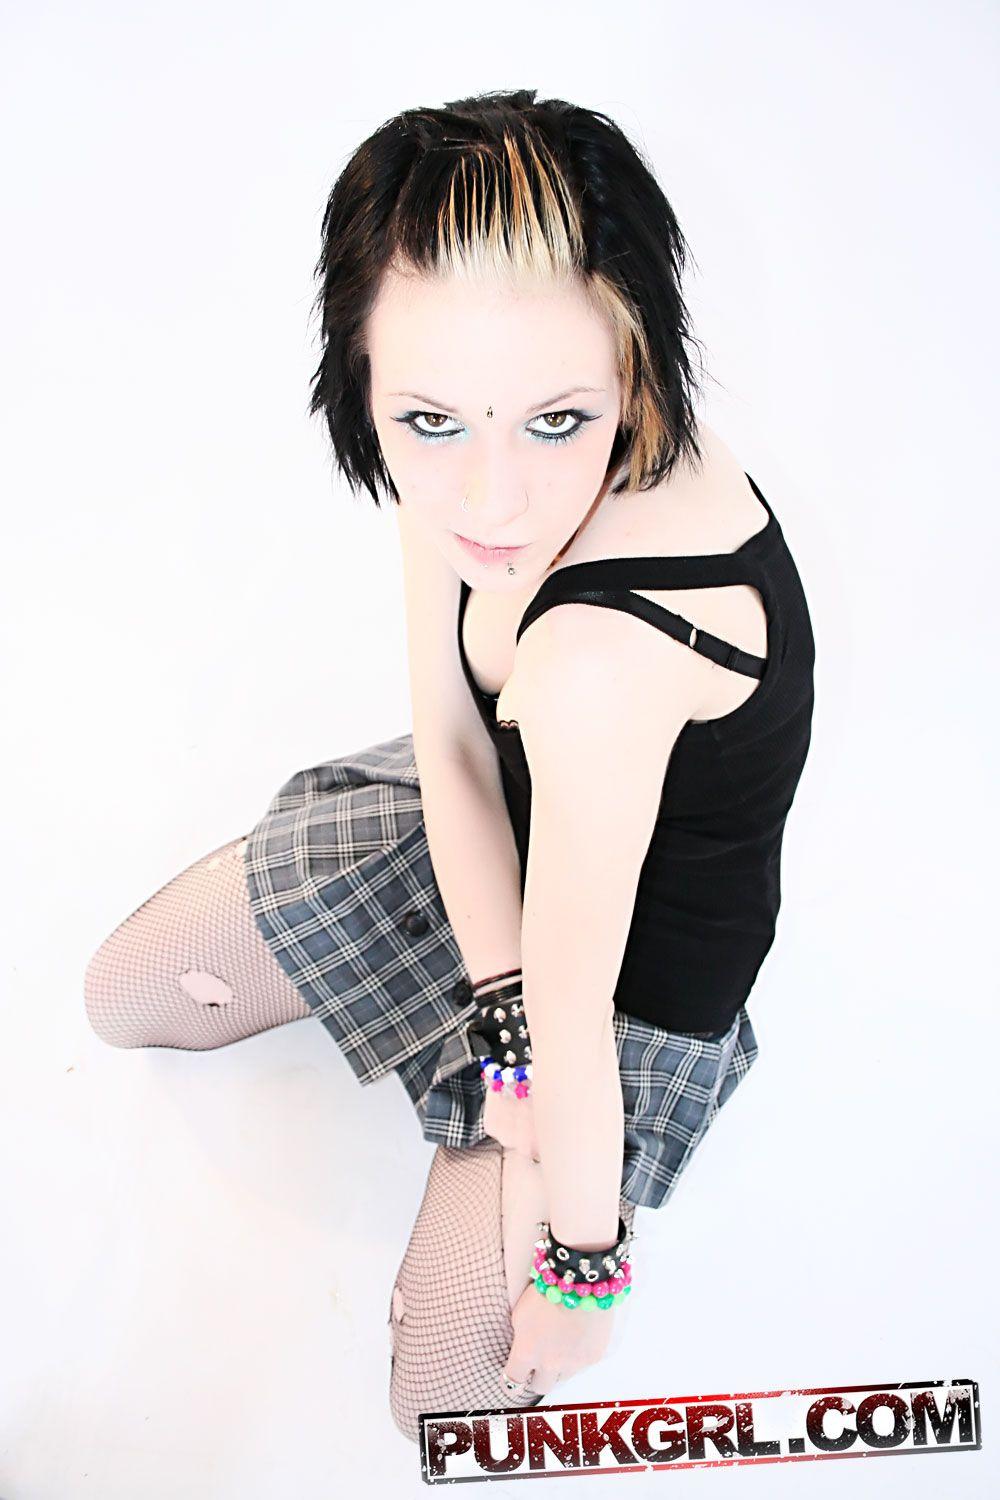 Pictures of teen punk Sky being a naughty schoolgirl #60763891